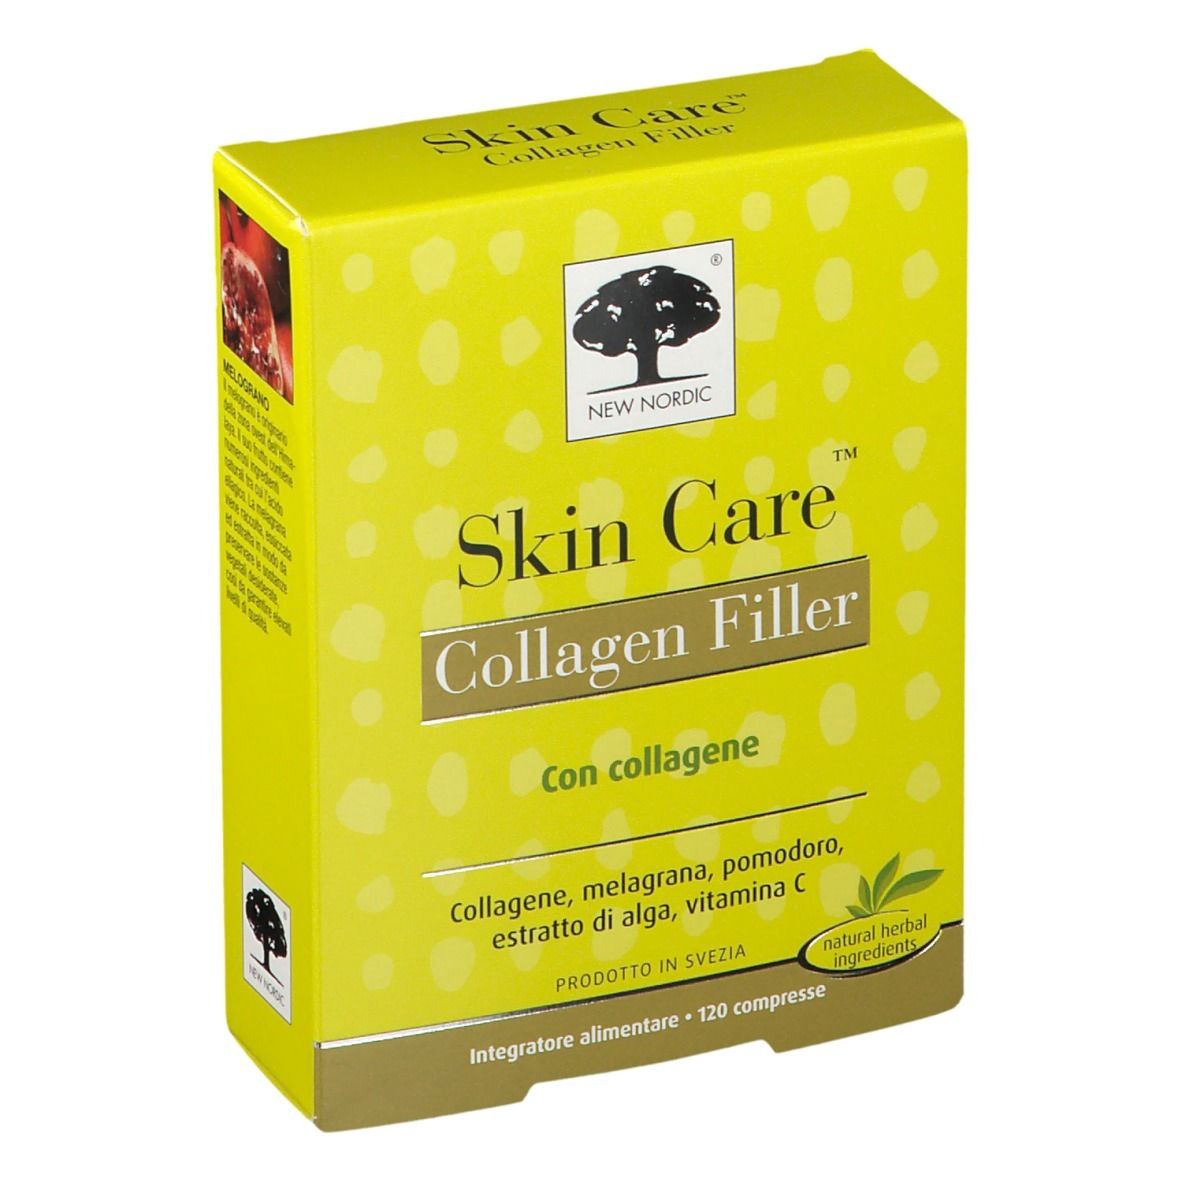 NEW NORDIC® Skin Care™ Collagen Filler